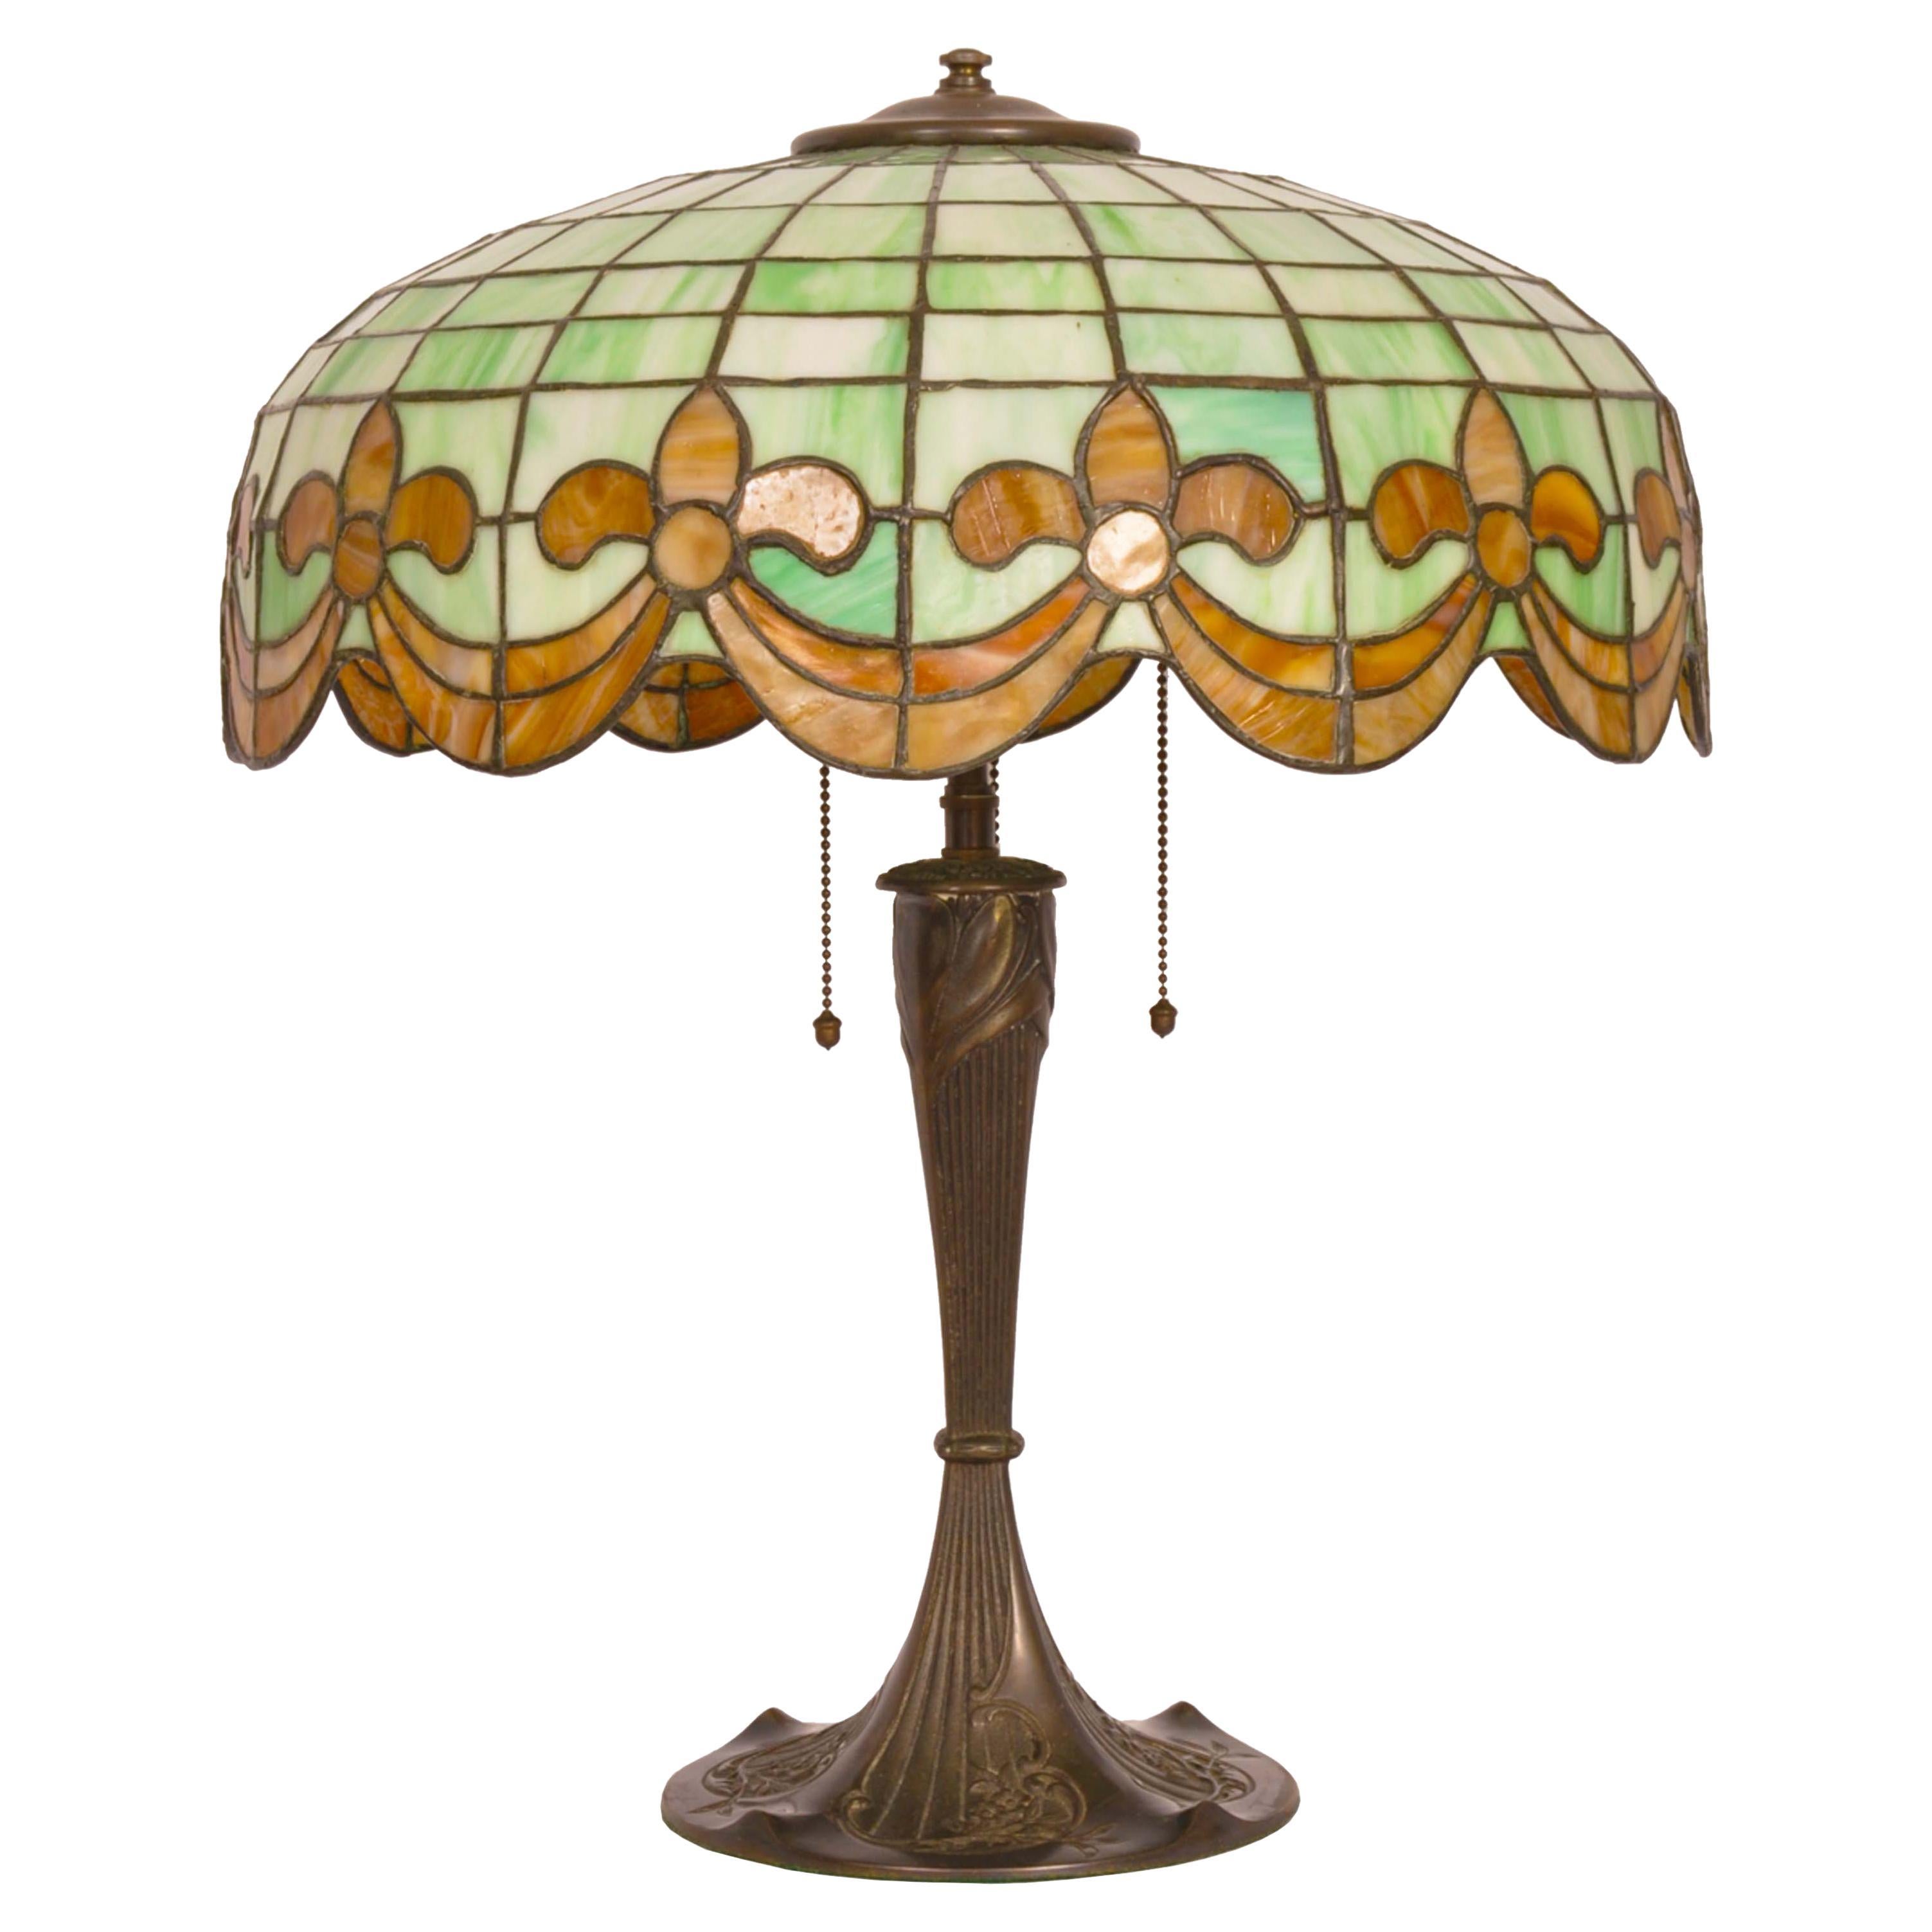 Antique American Art Nouveau Bronze & Leaded Glass Table Lamp by Wilkinson, 1910 For Sale